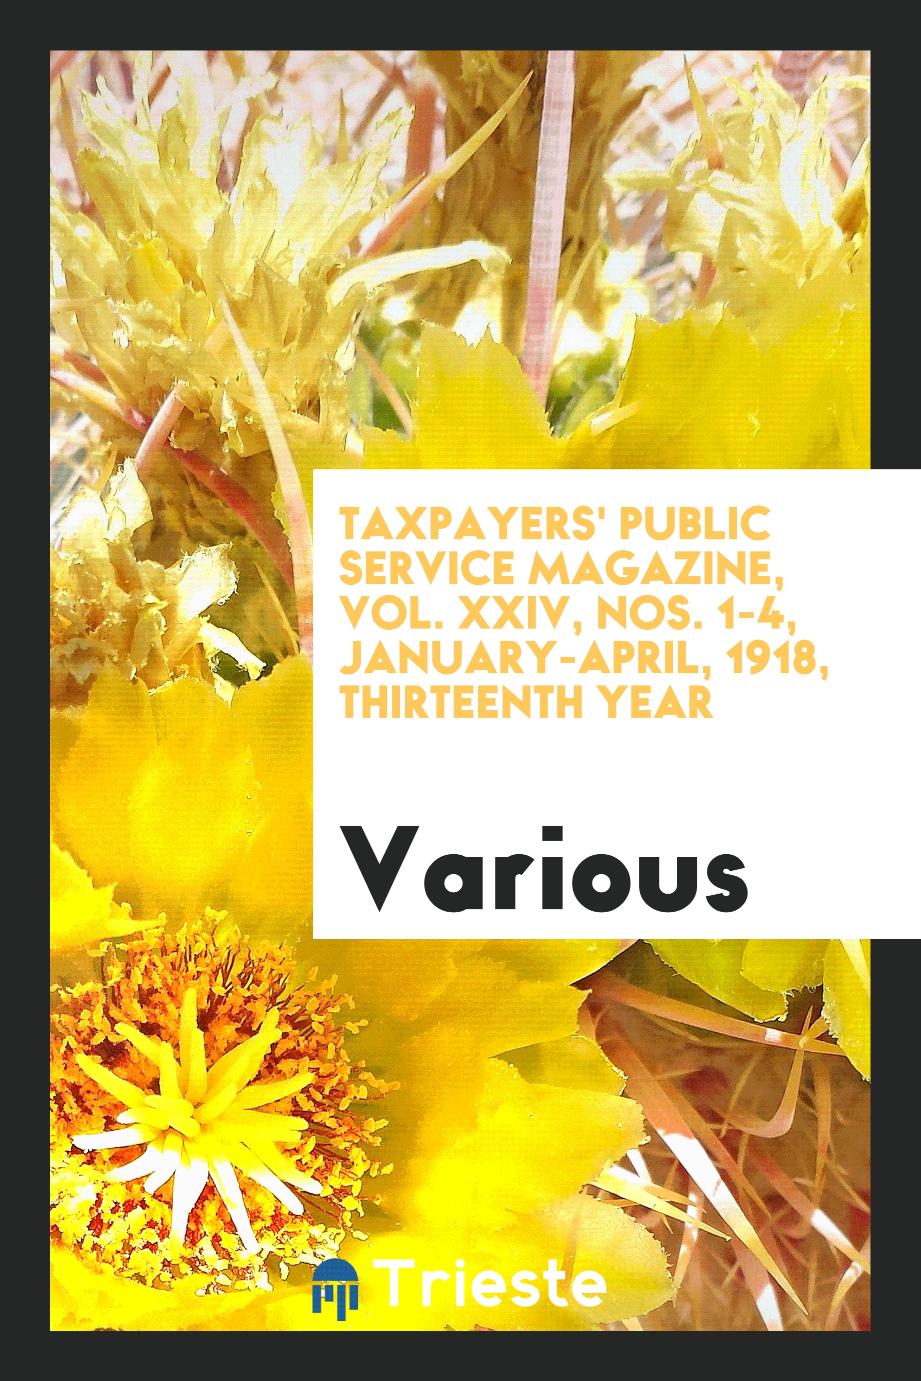 Taxpayers' Public Service Magazine, Vol. XXIV, Nos. 1-4, January-April, 1918, Thirteenth Year